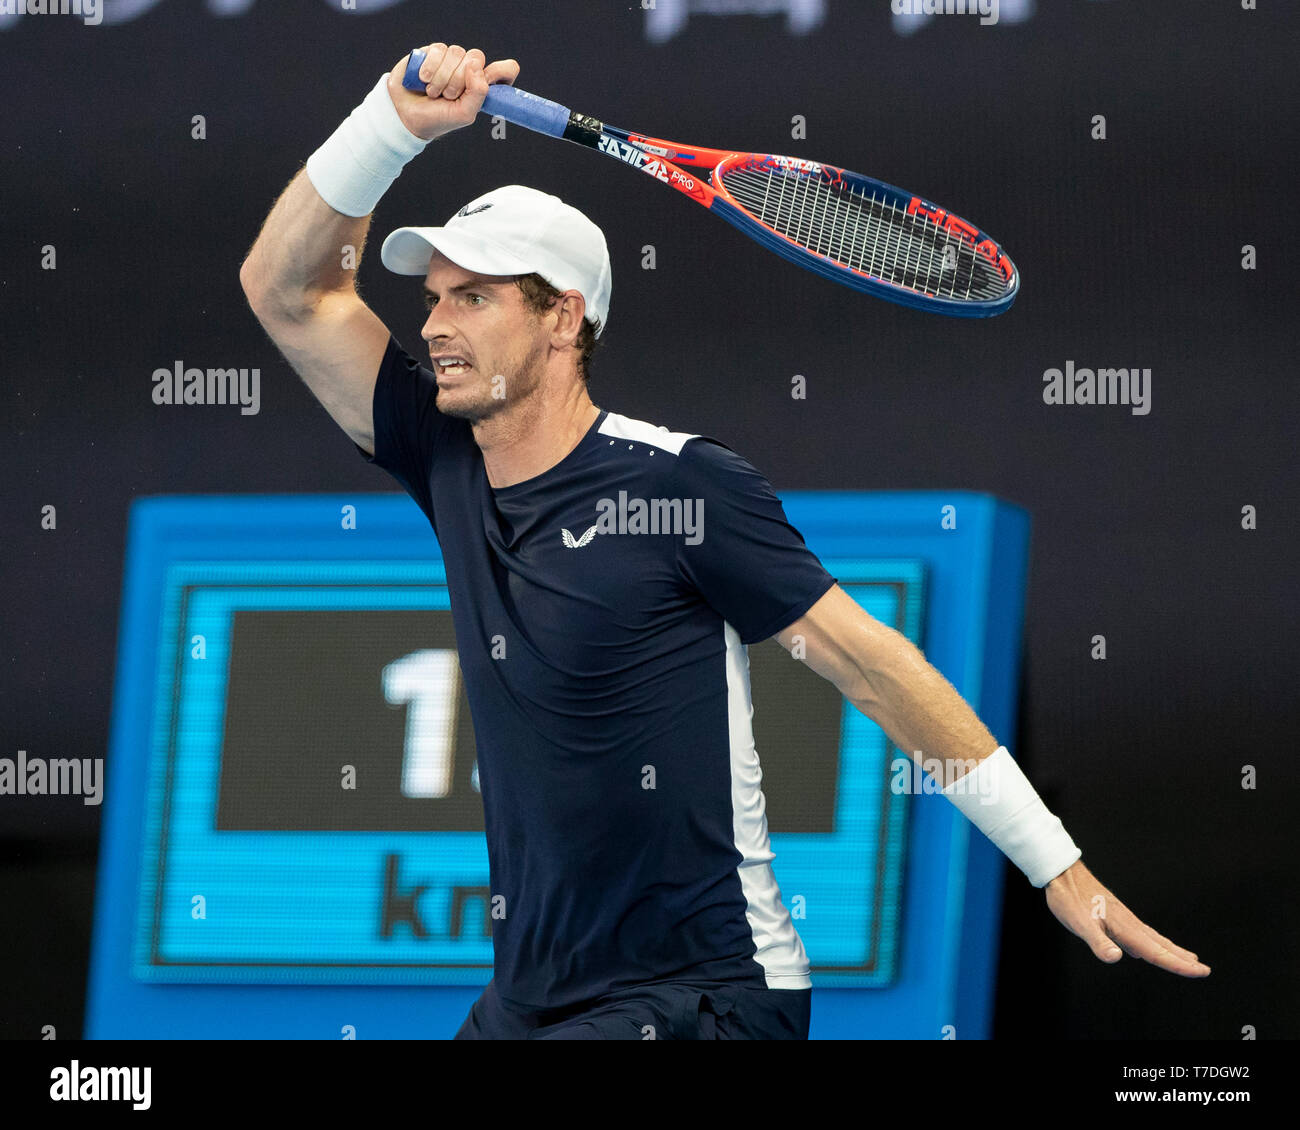 British tennis player Andy Murray playing during Australian Open 2019 tennis  tournament, Melbourne Park, Melbourne, Victoria, Australia Stock Photo -  Alamy